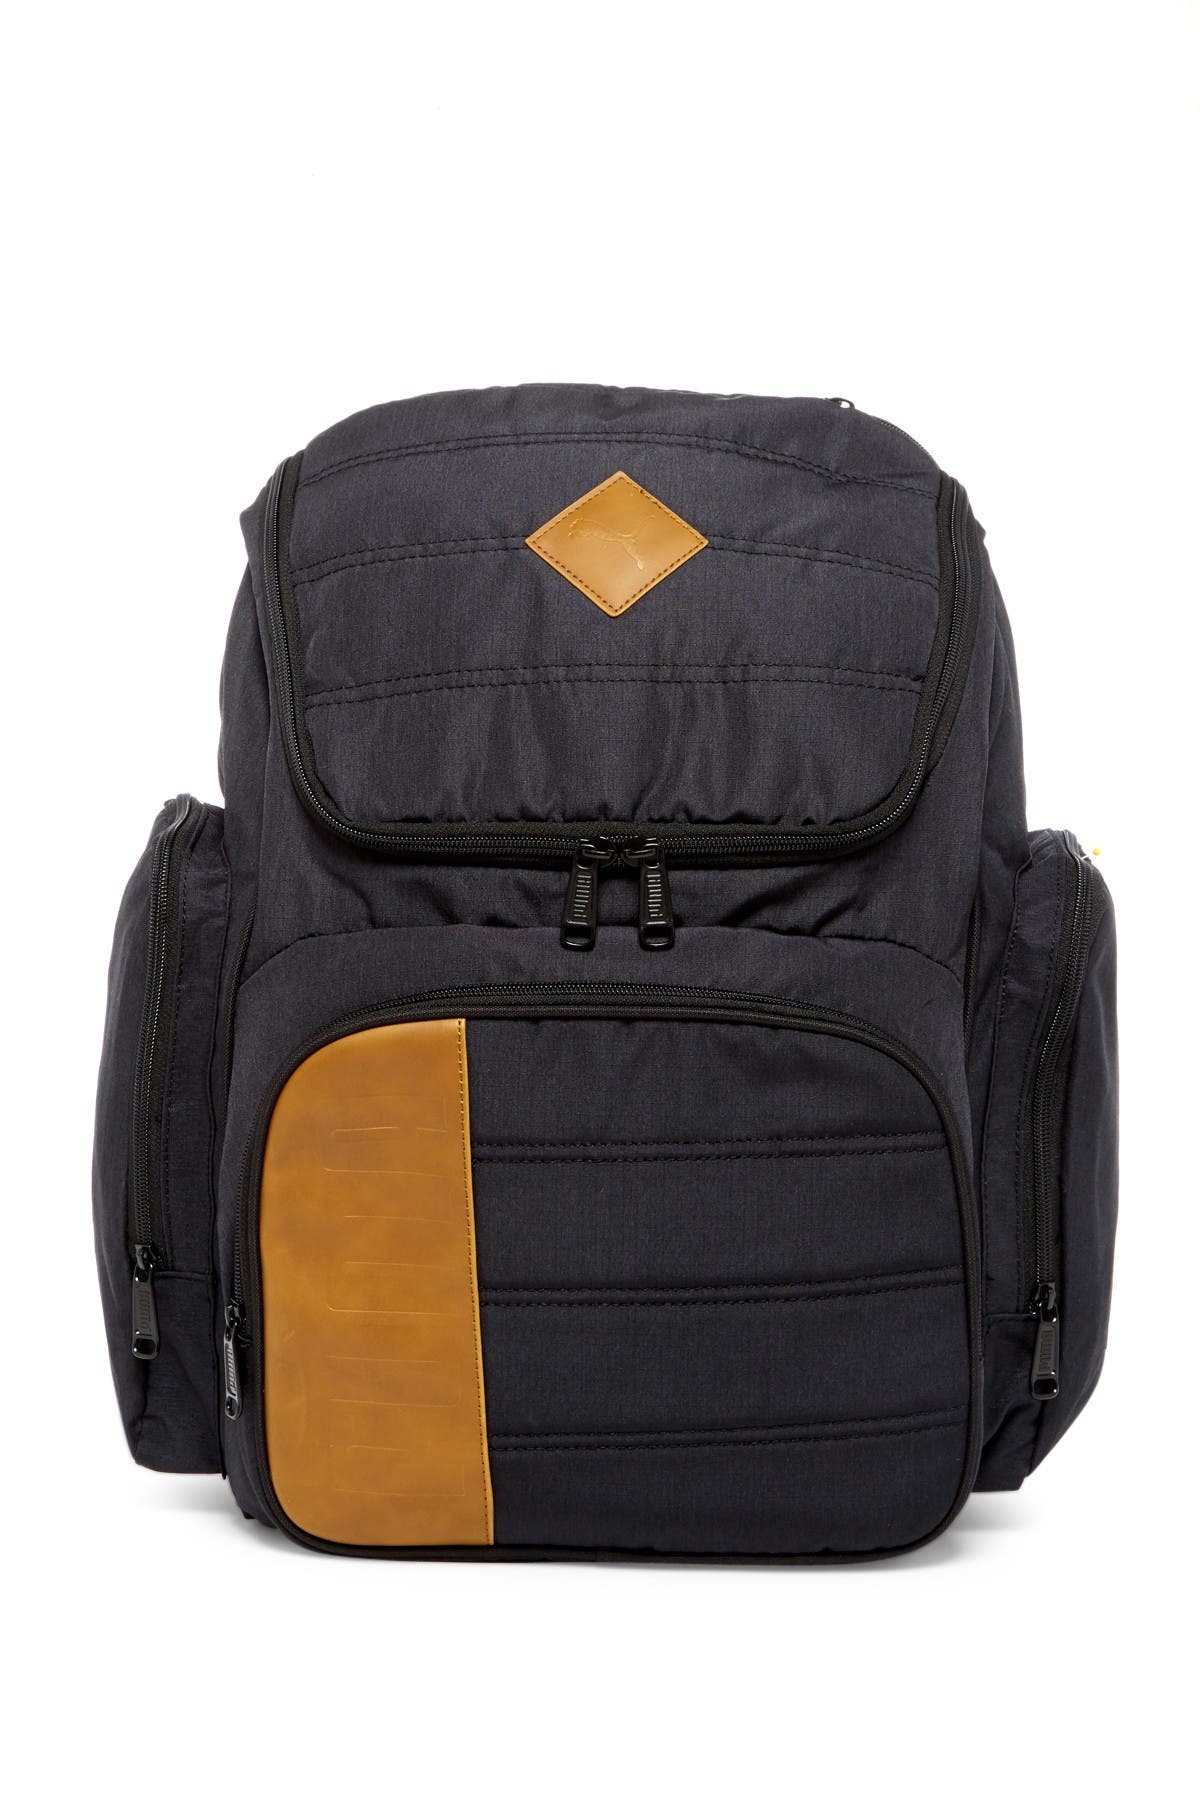 rn 90288 adidas backpack